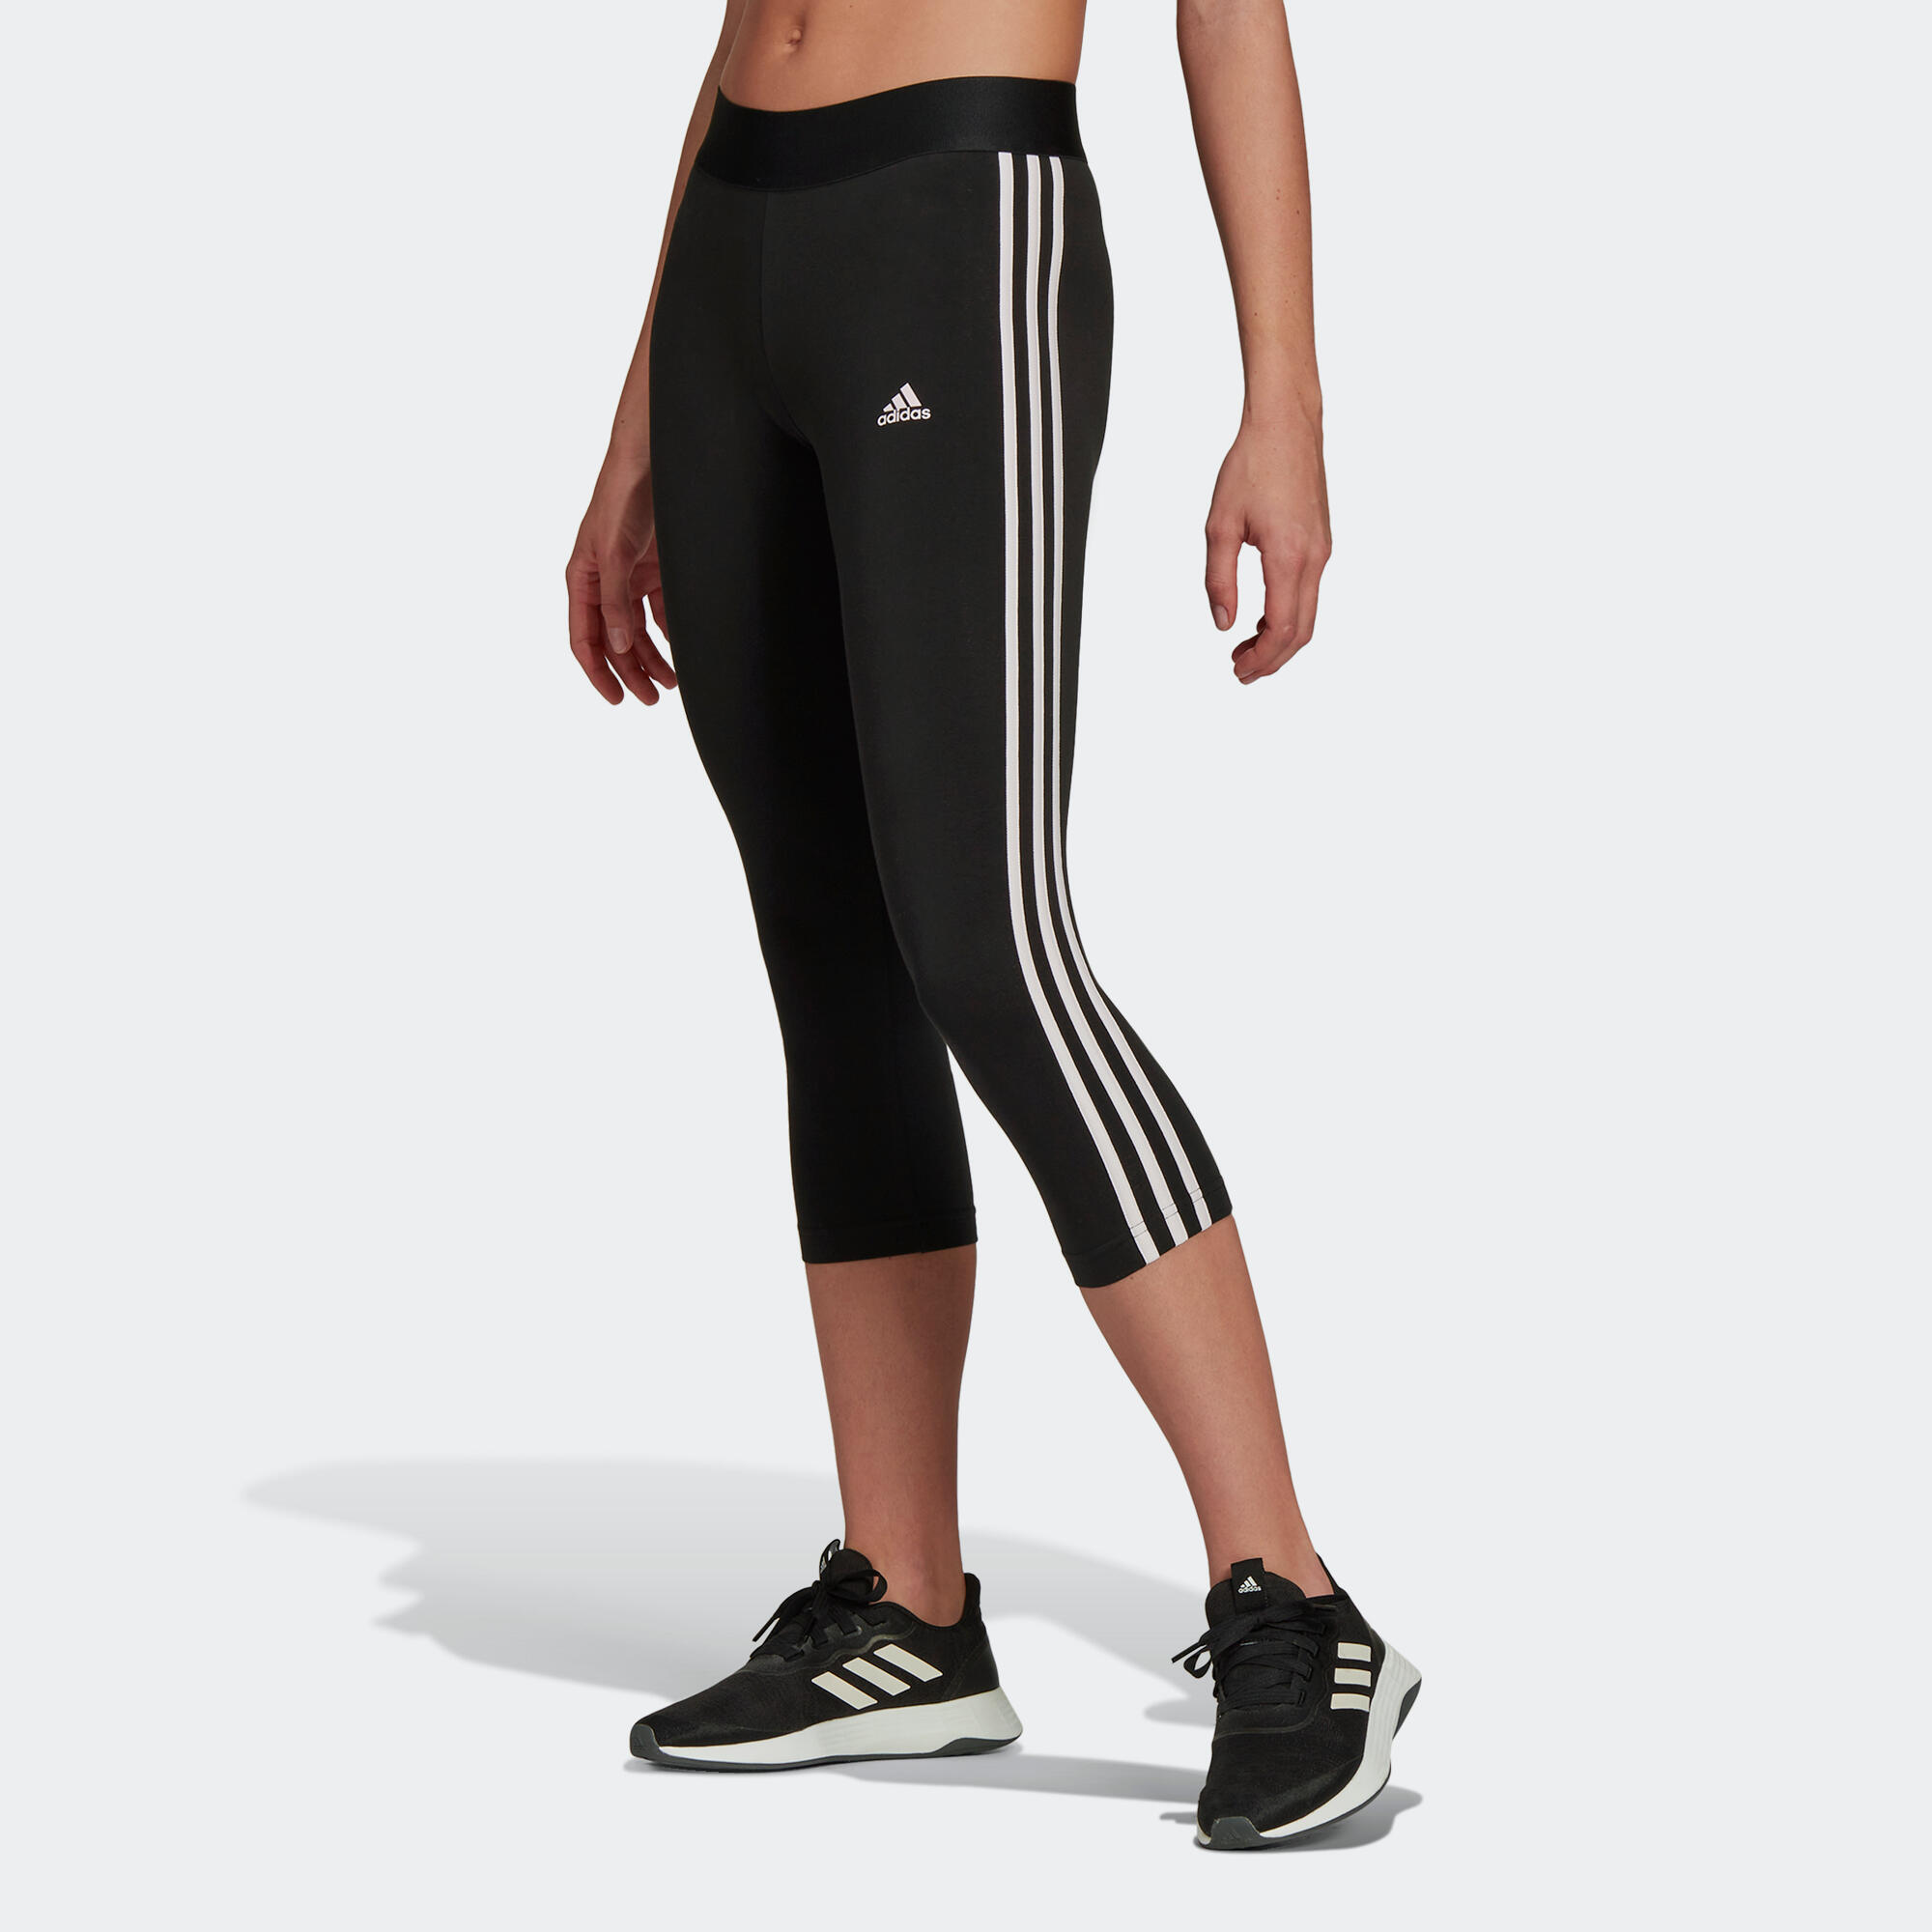 Colanți Fitness 7/8 Adidas Essentials Negru-Alb Damă decathlon.ro  Imbracaminte fitness femei